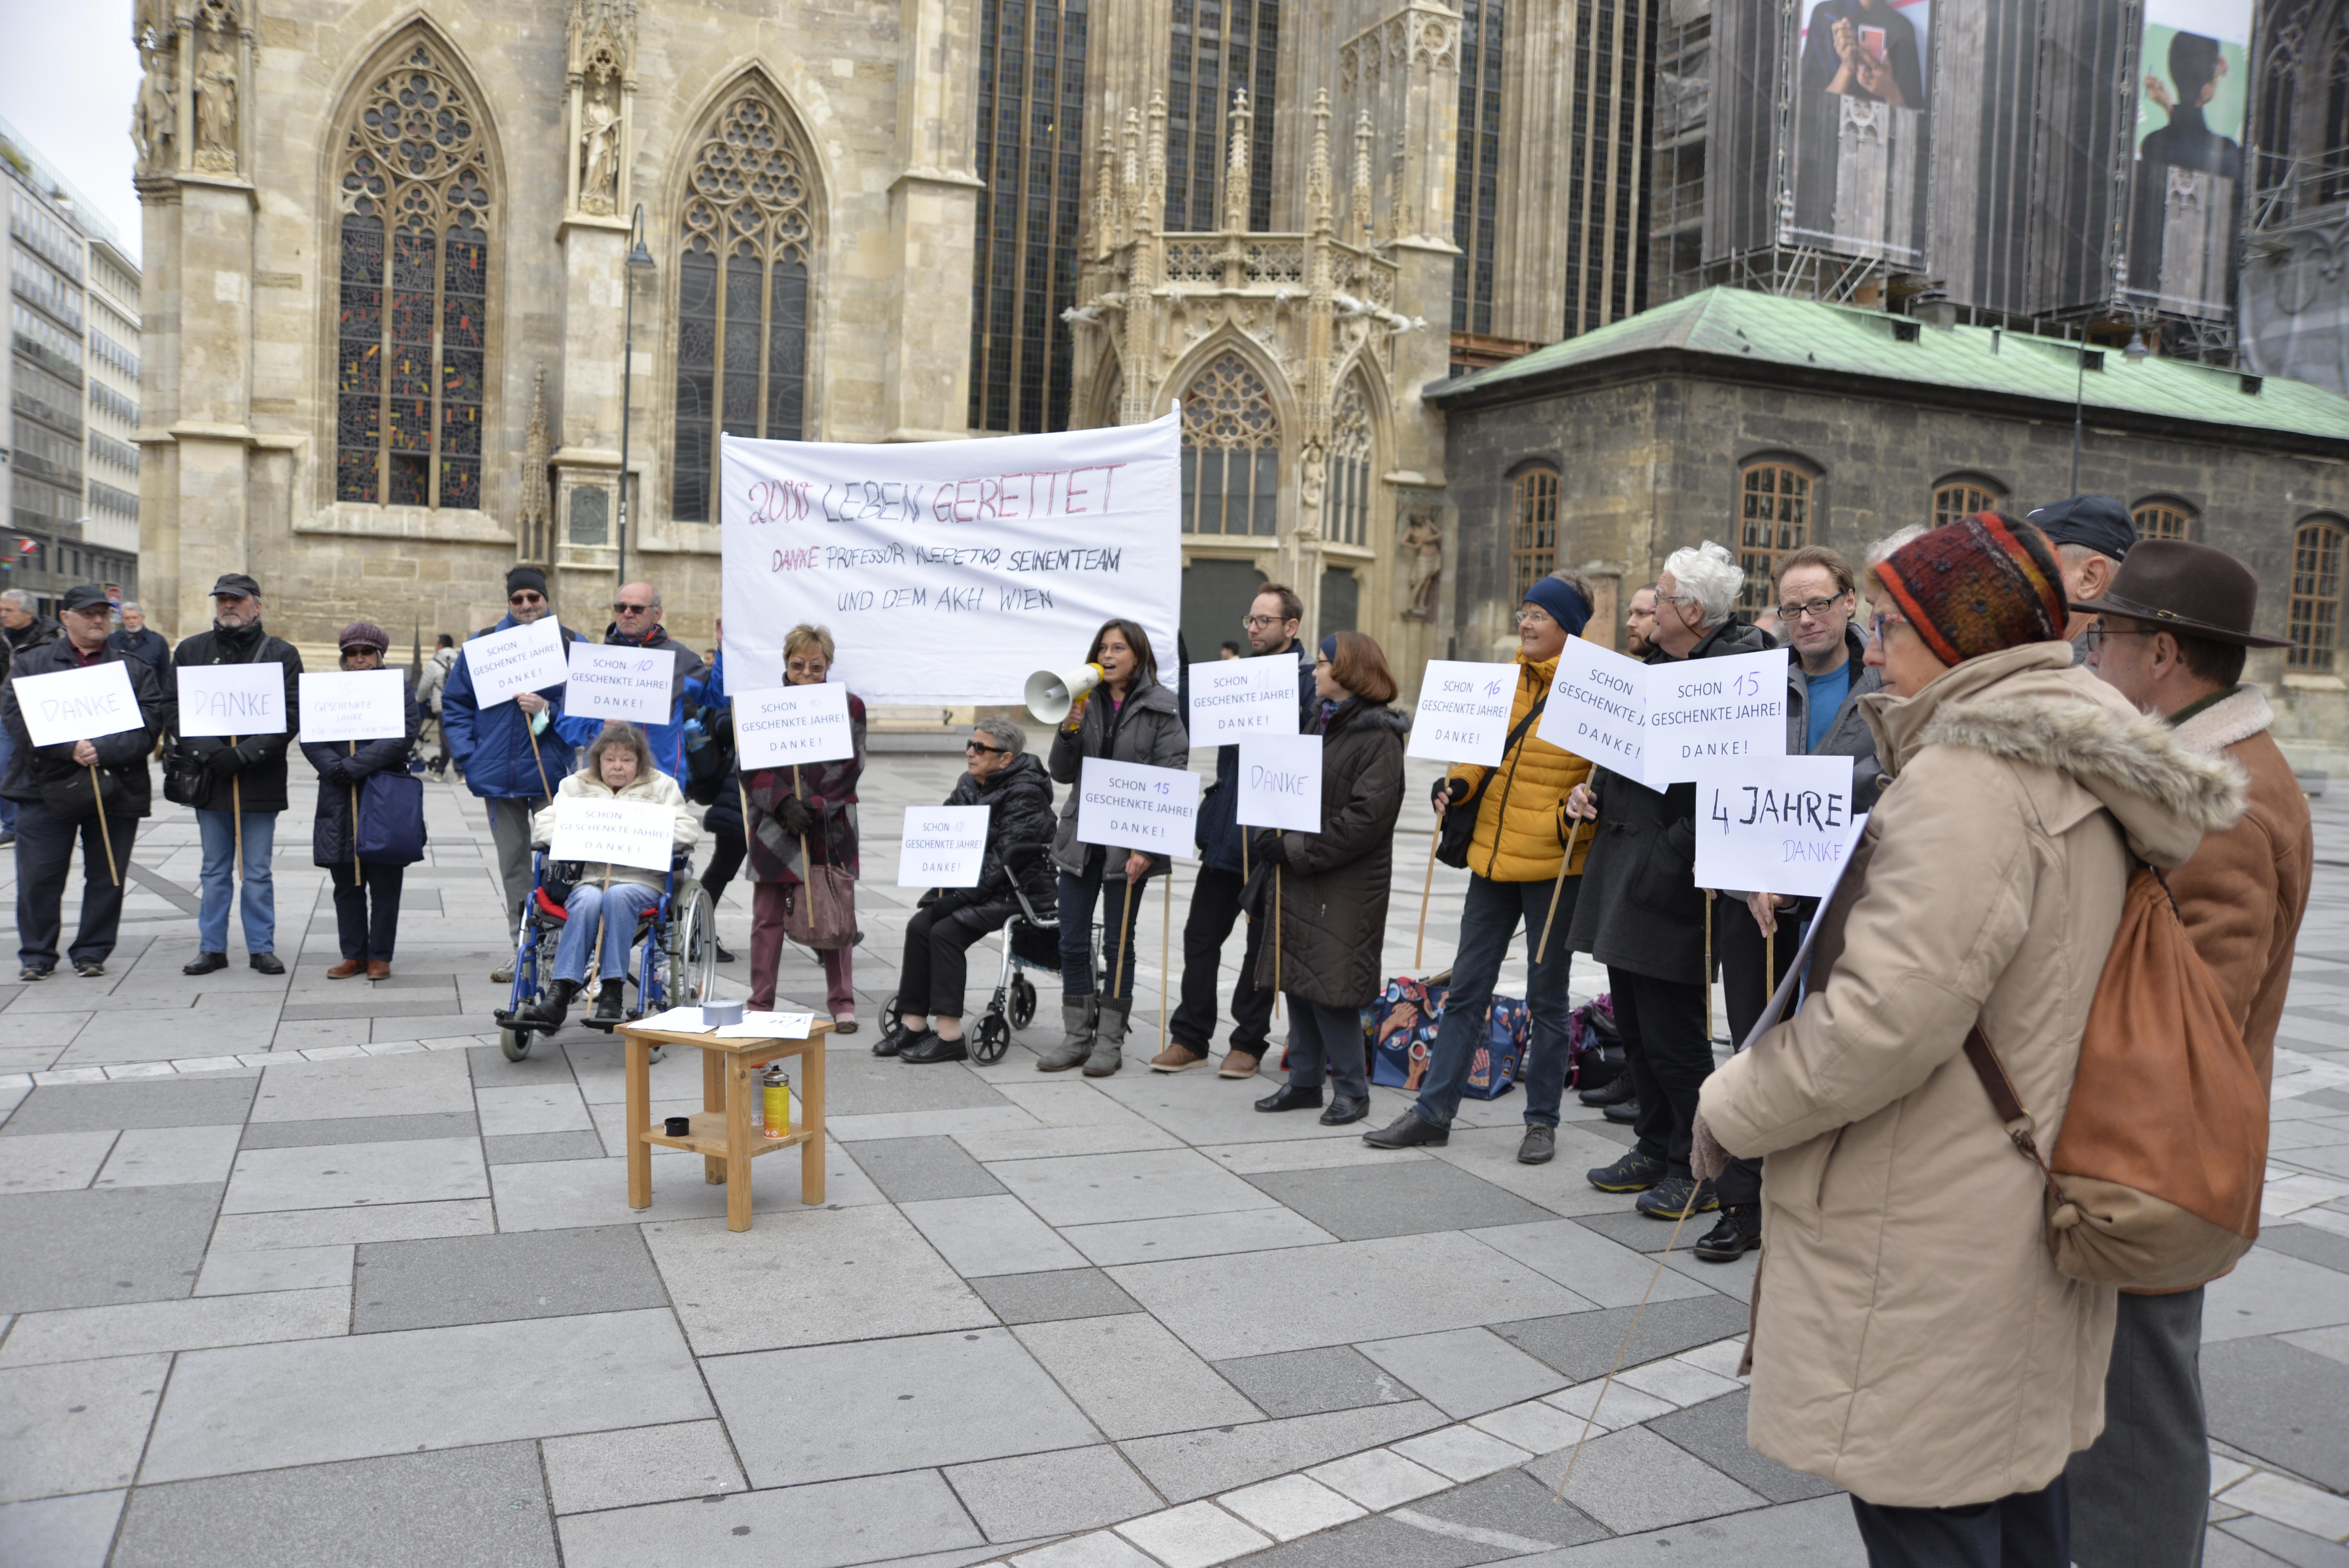 Transplantationspatienten demonstrierten am Wiener Stephansplatz